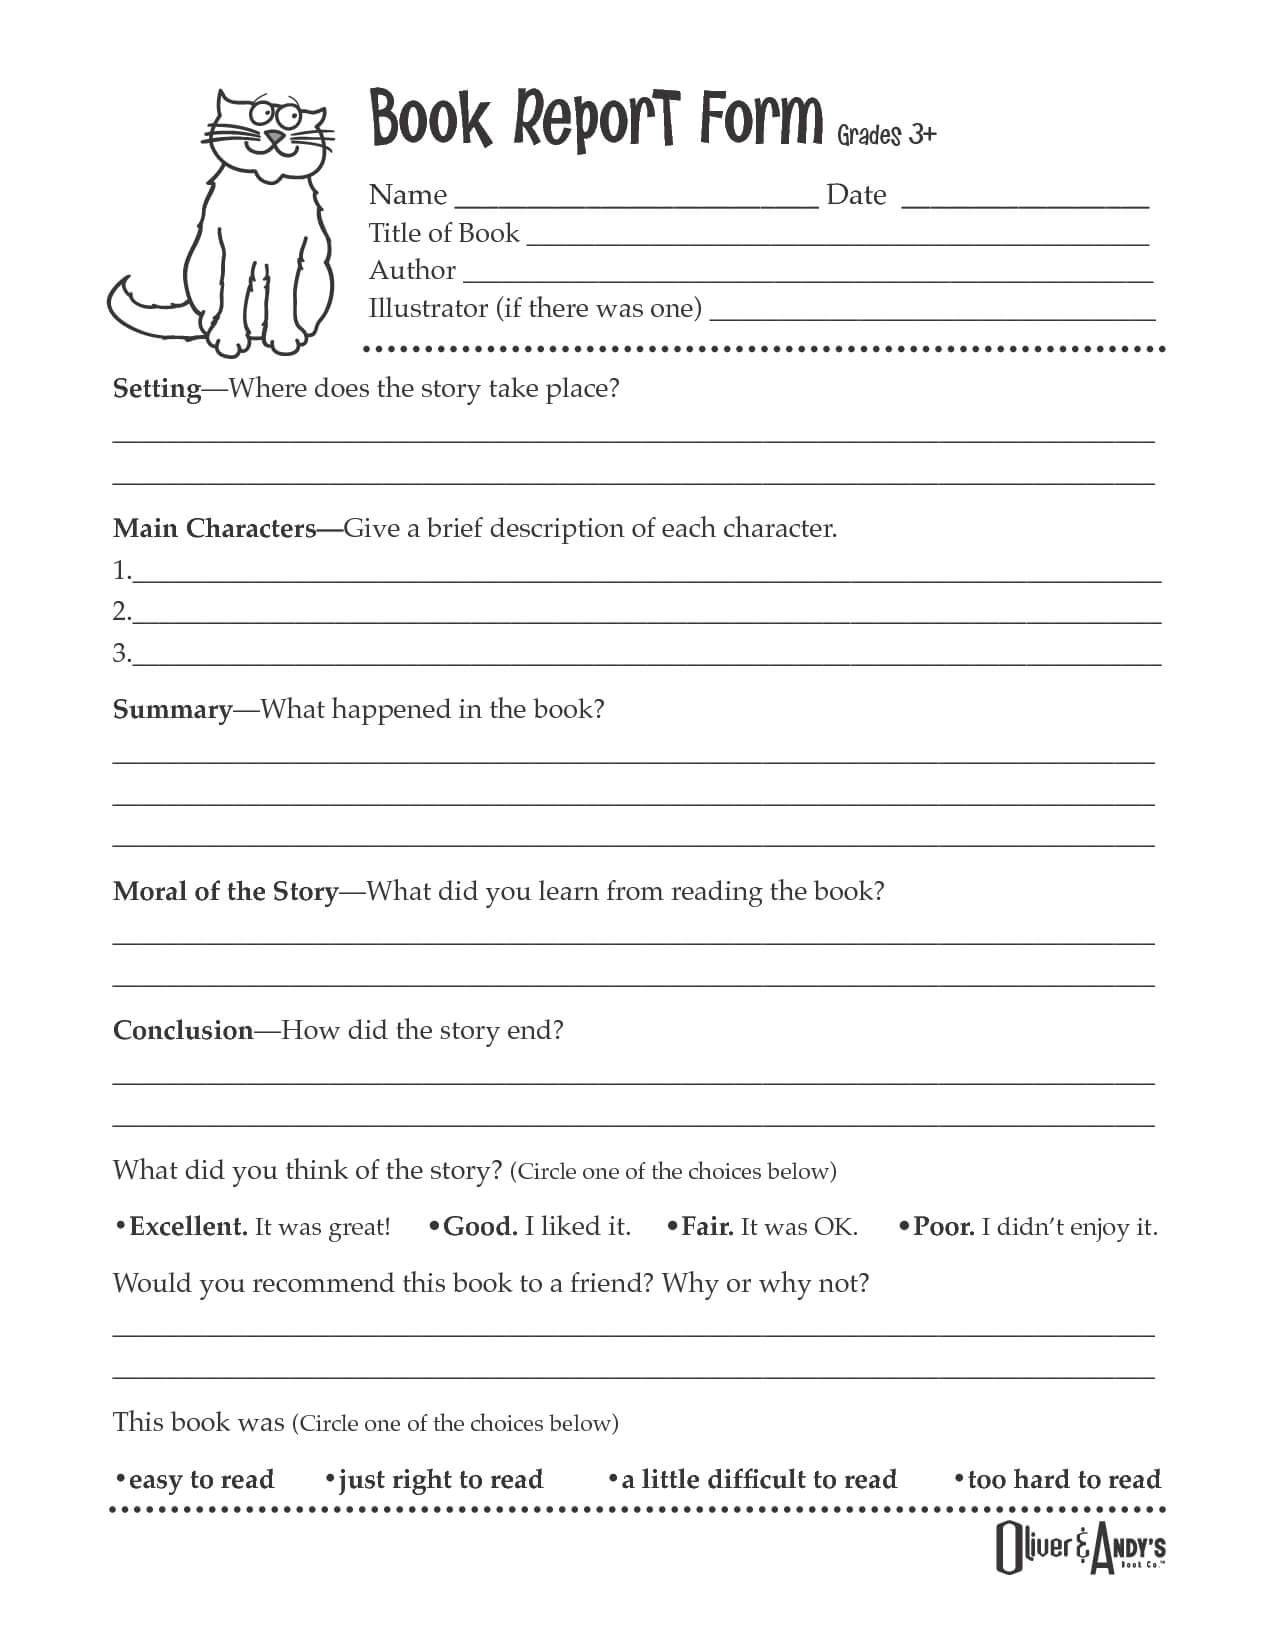 Second Grade Book Report Template | Book Report Form Grades Inside Second Grade Book Report Template